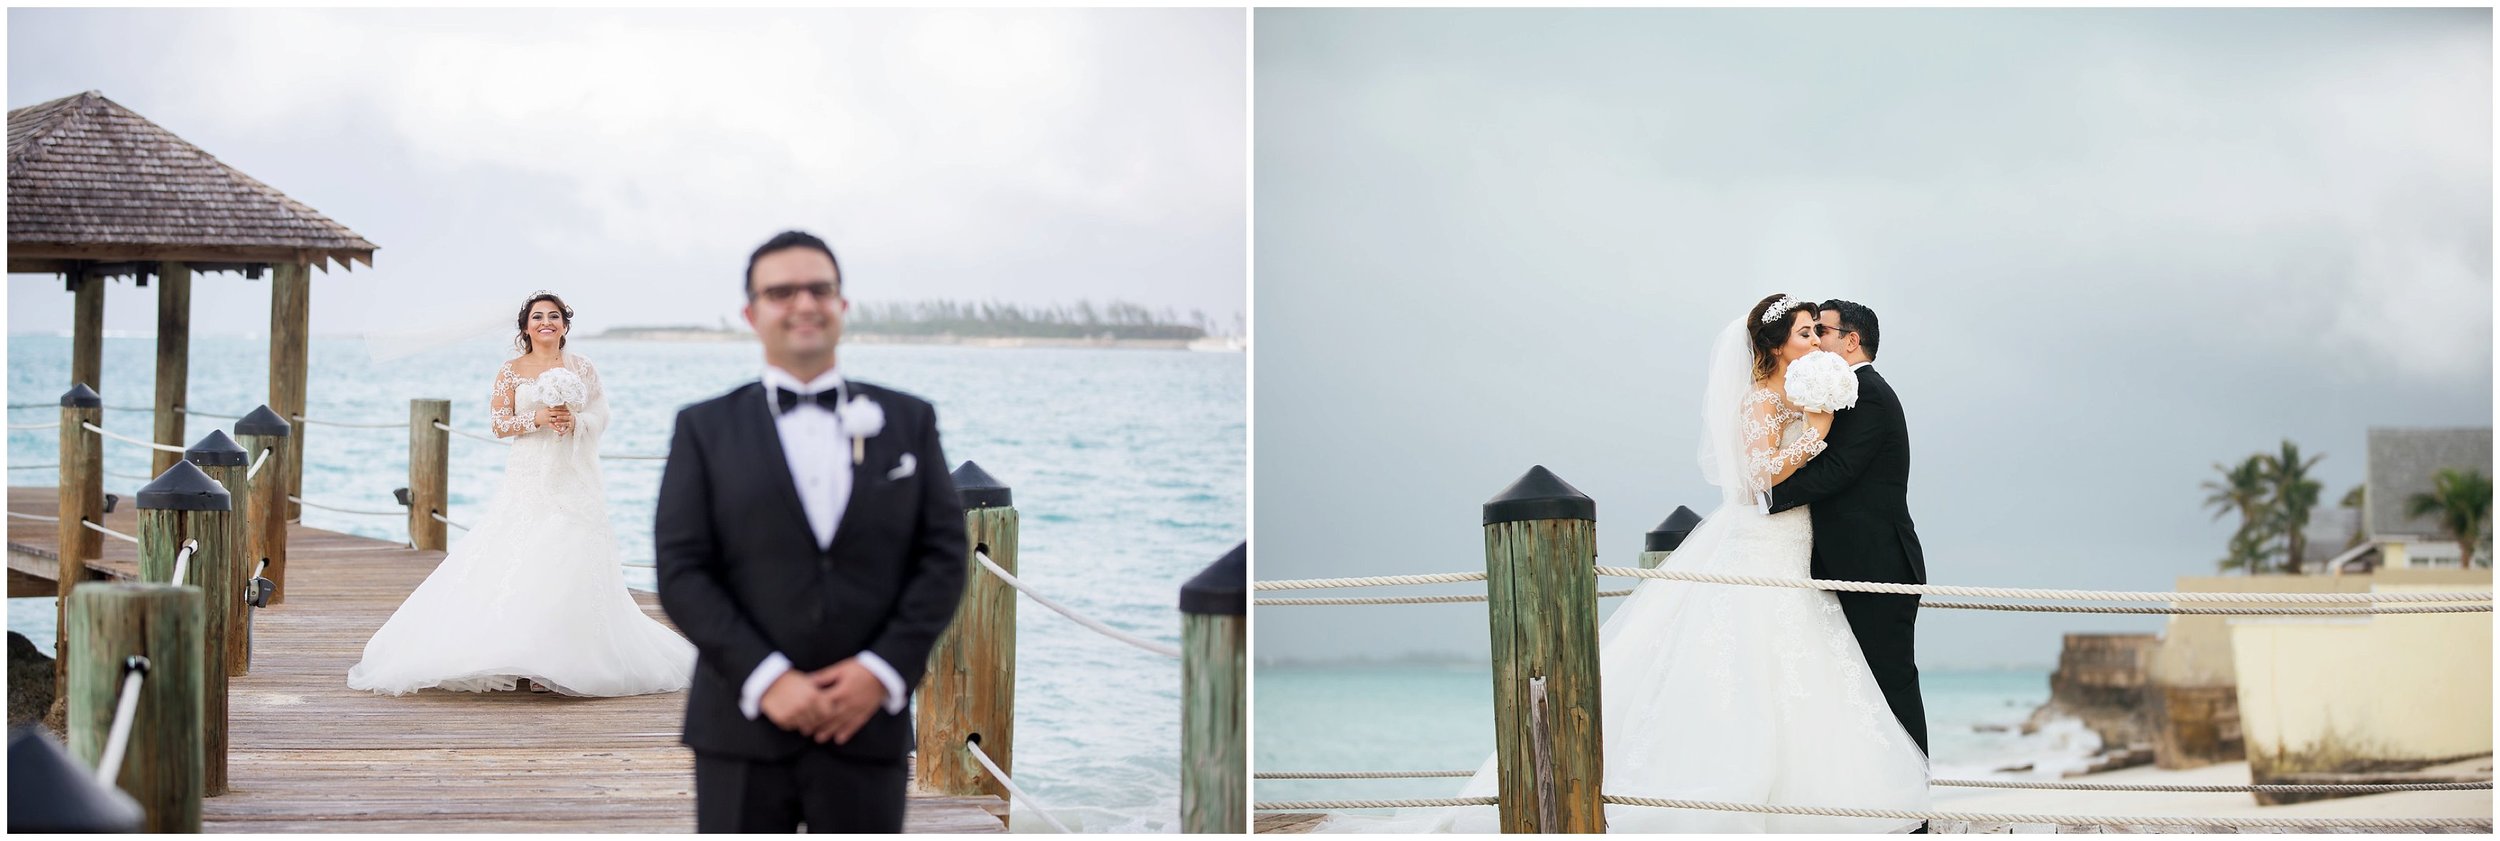 Le Cape Weddings- Destination Wedding Photography -ShayanandNikkie-235-X3_LuxuryDestinationPhotographer.jpg